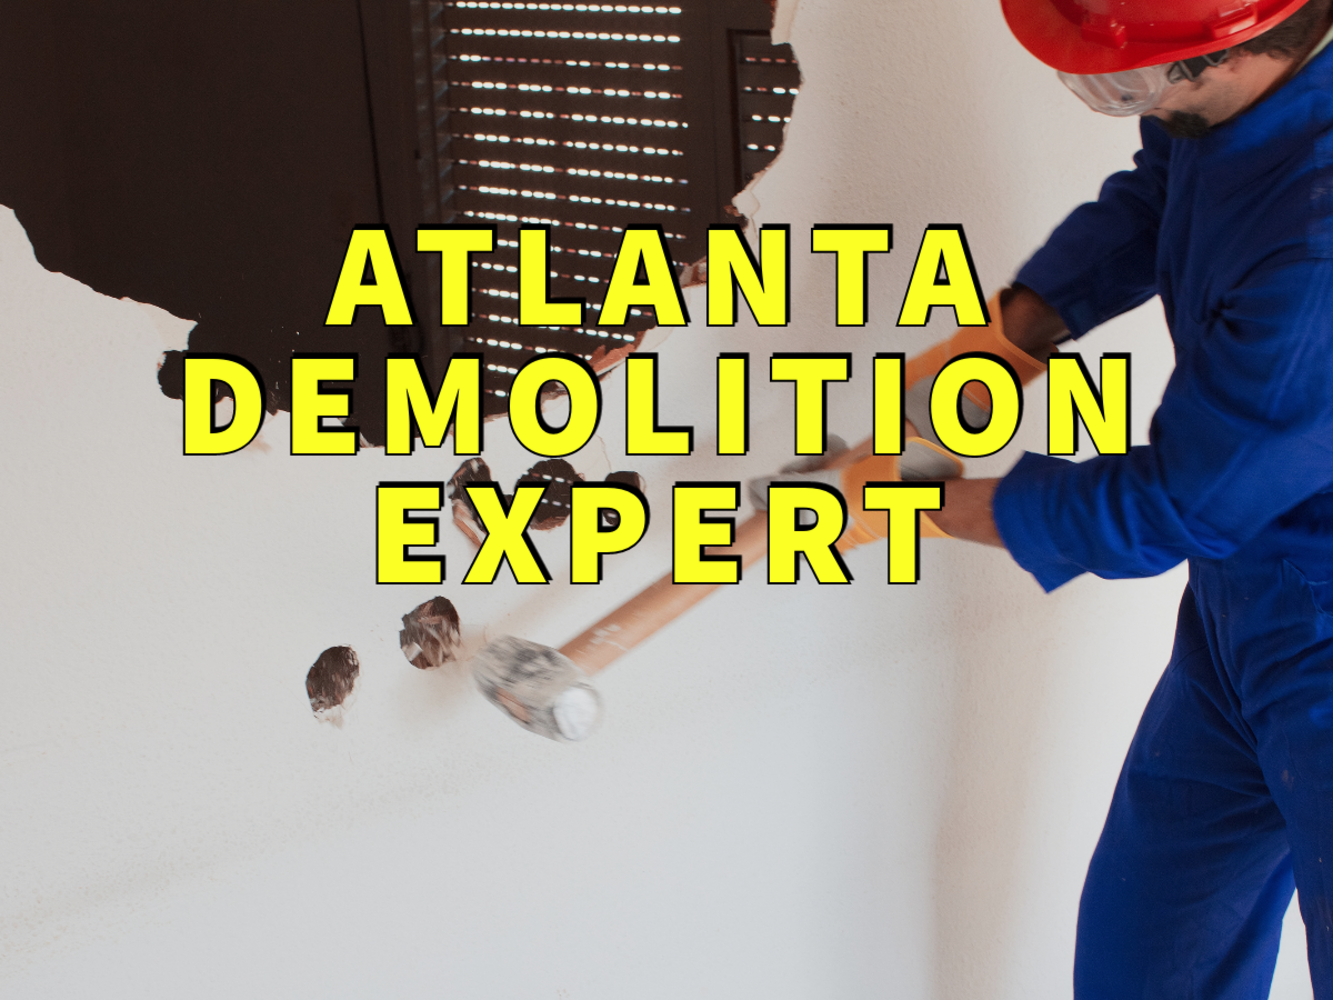 Atlanta demolition expert written in yellow over man in blue jumpsuit demolishing drywall with sledgehammer